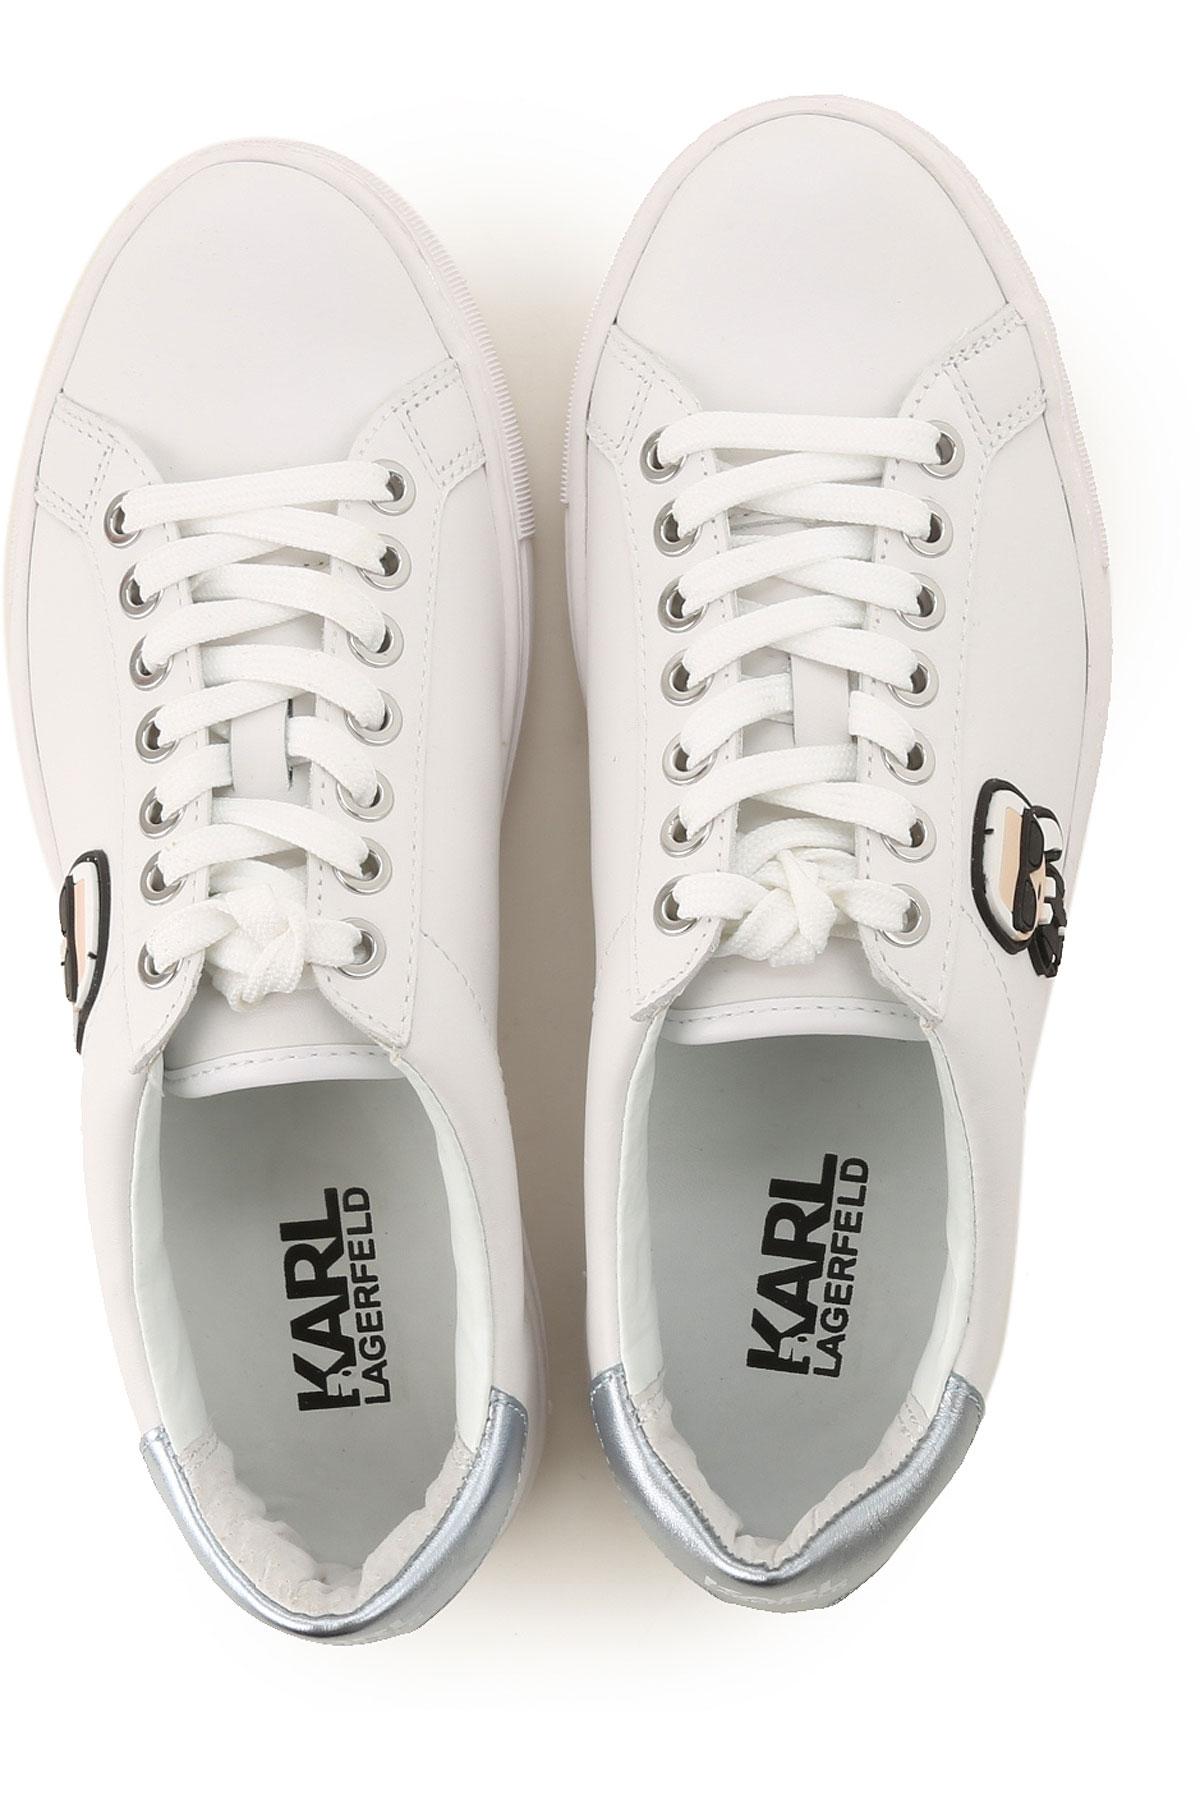 Karl Lagerfeld Sneakers For Women On Sale in White - Lyst